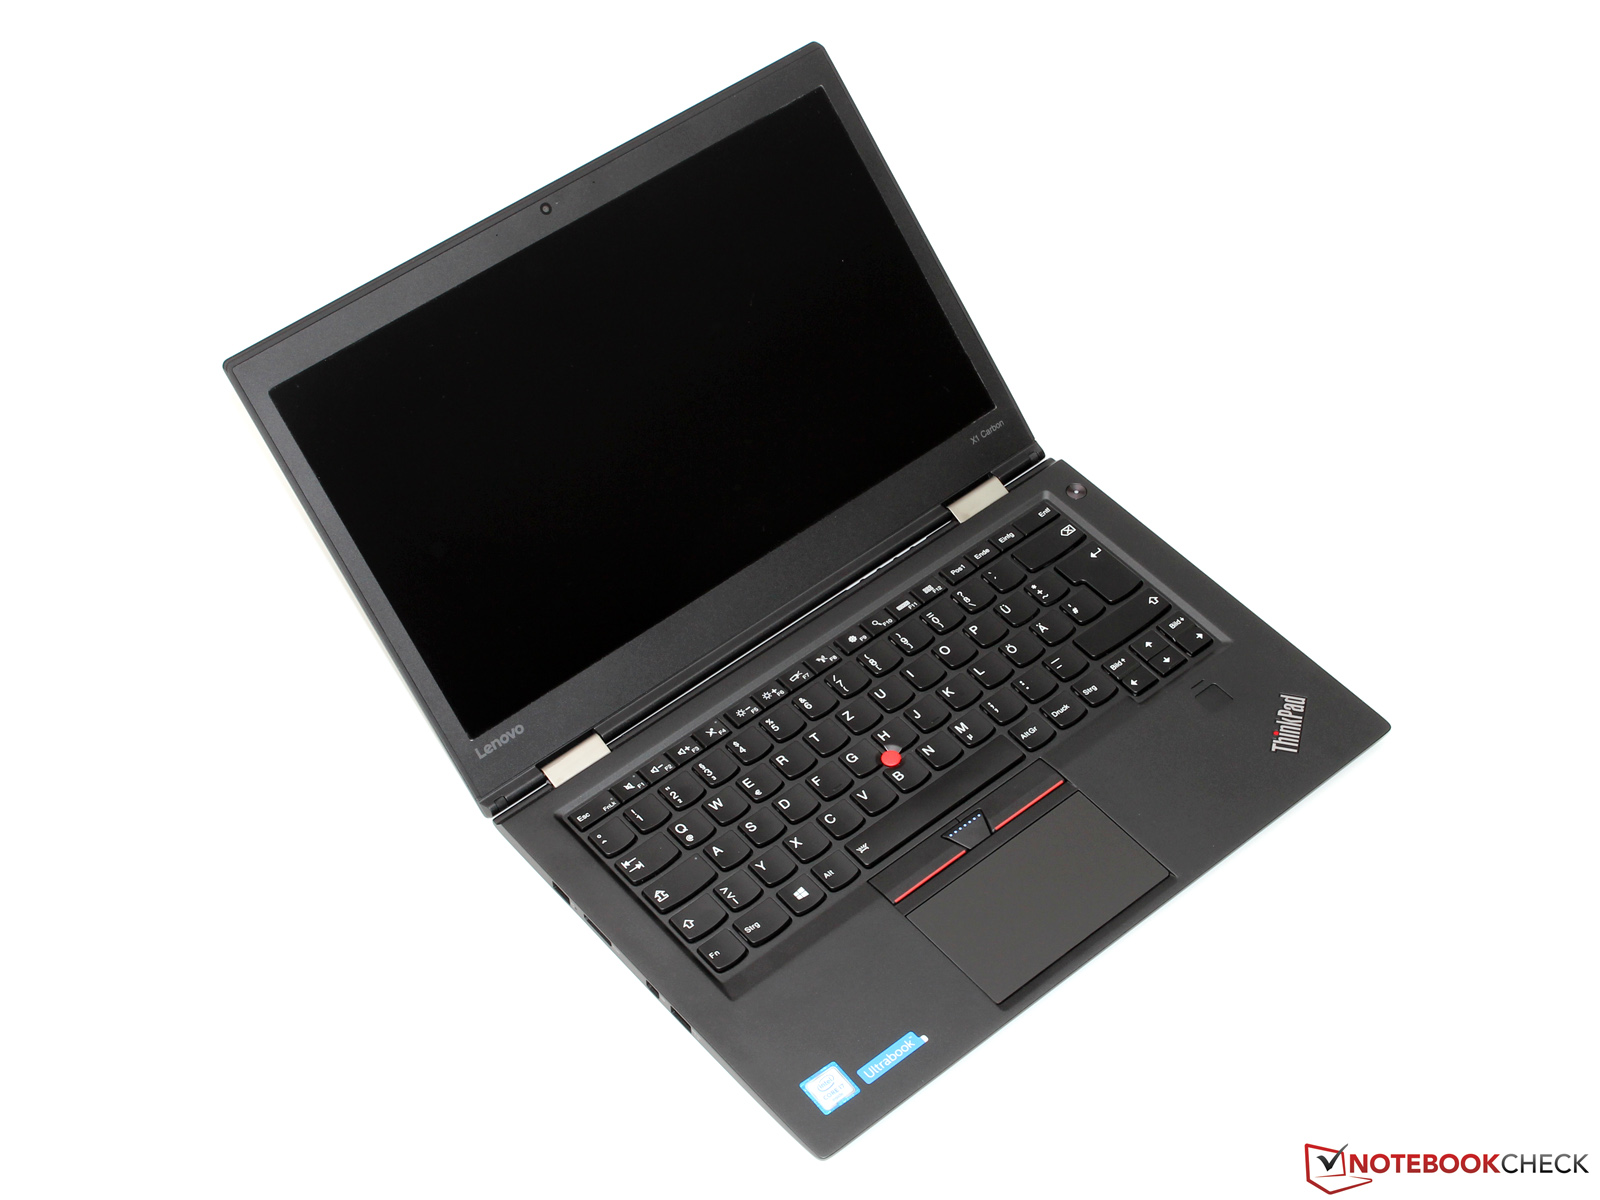 Screen Protector Set of 2 Lenovo Thinkpad X1 Carbon 14" Fourth Generation Laptop 